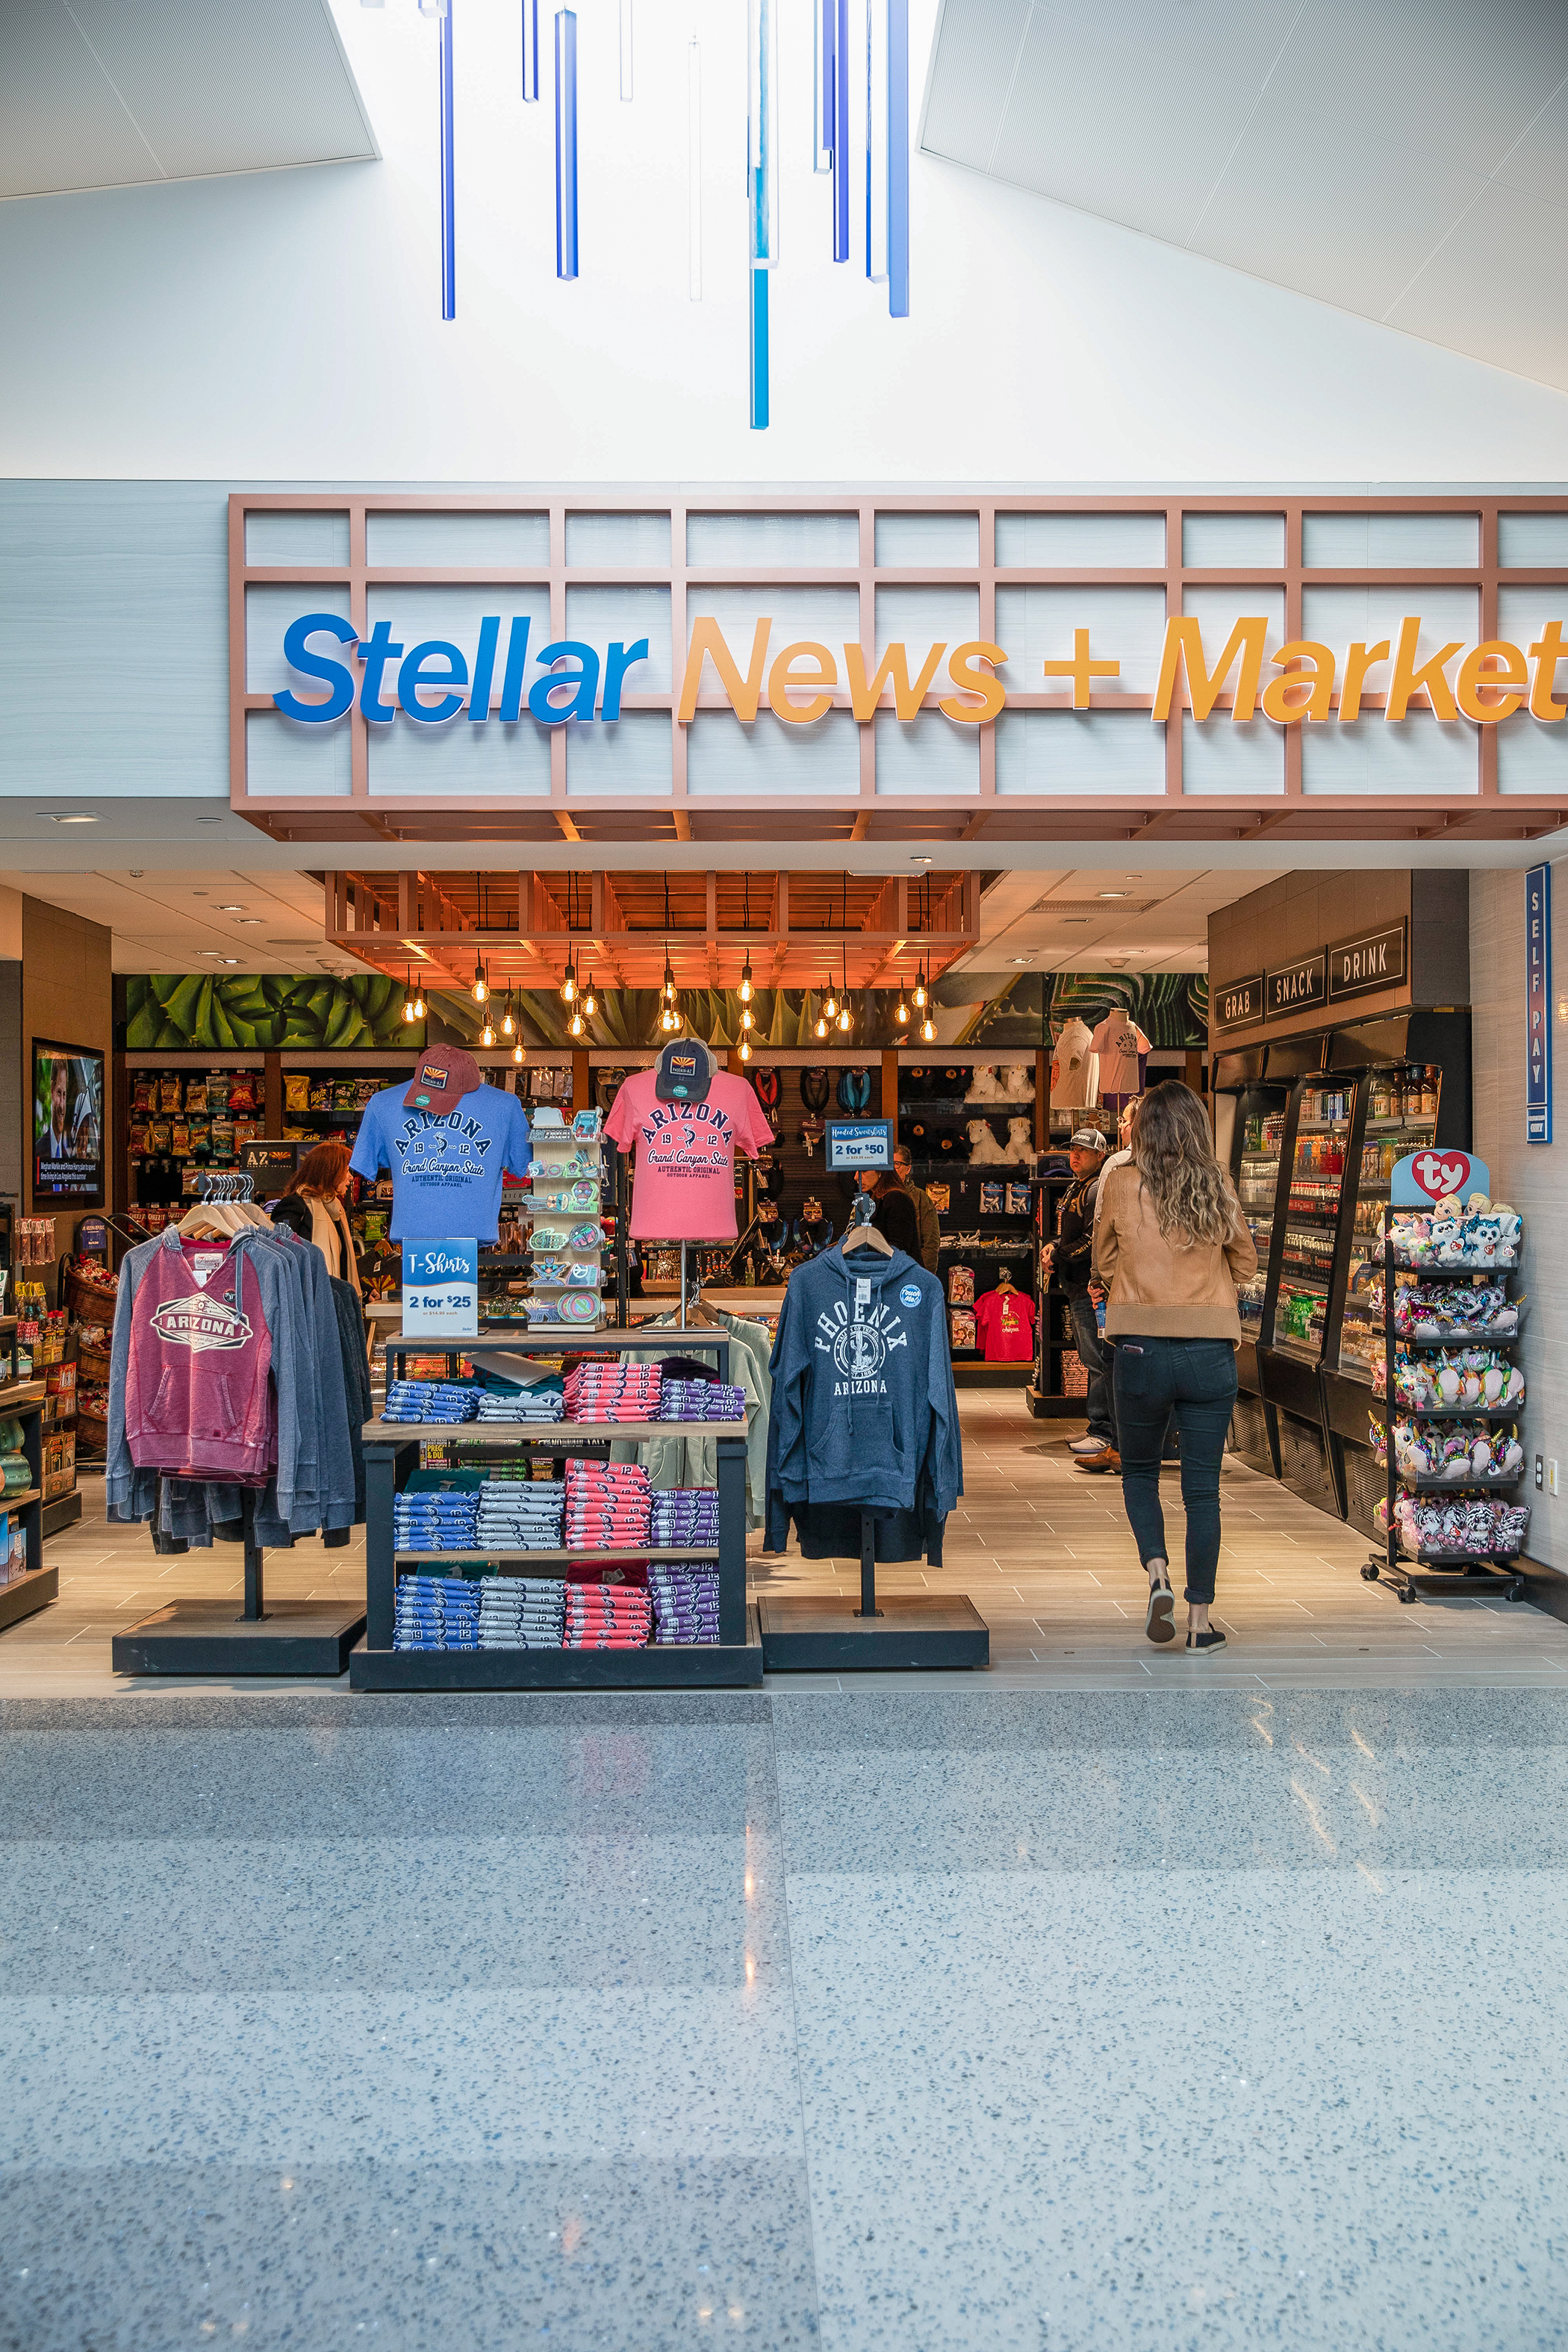 Stellar News + Market